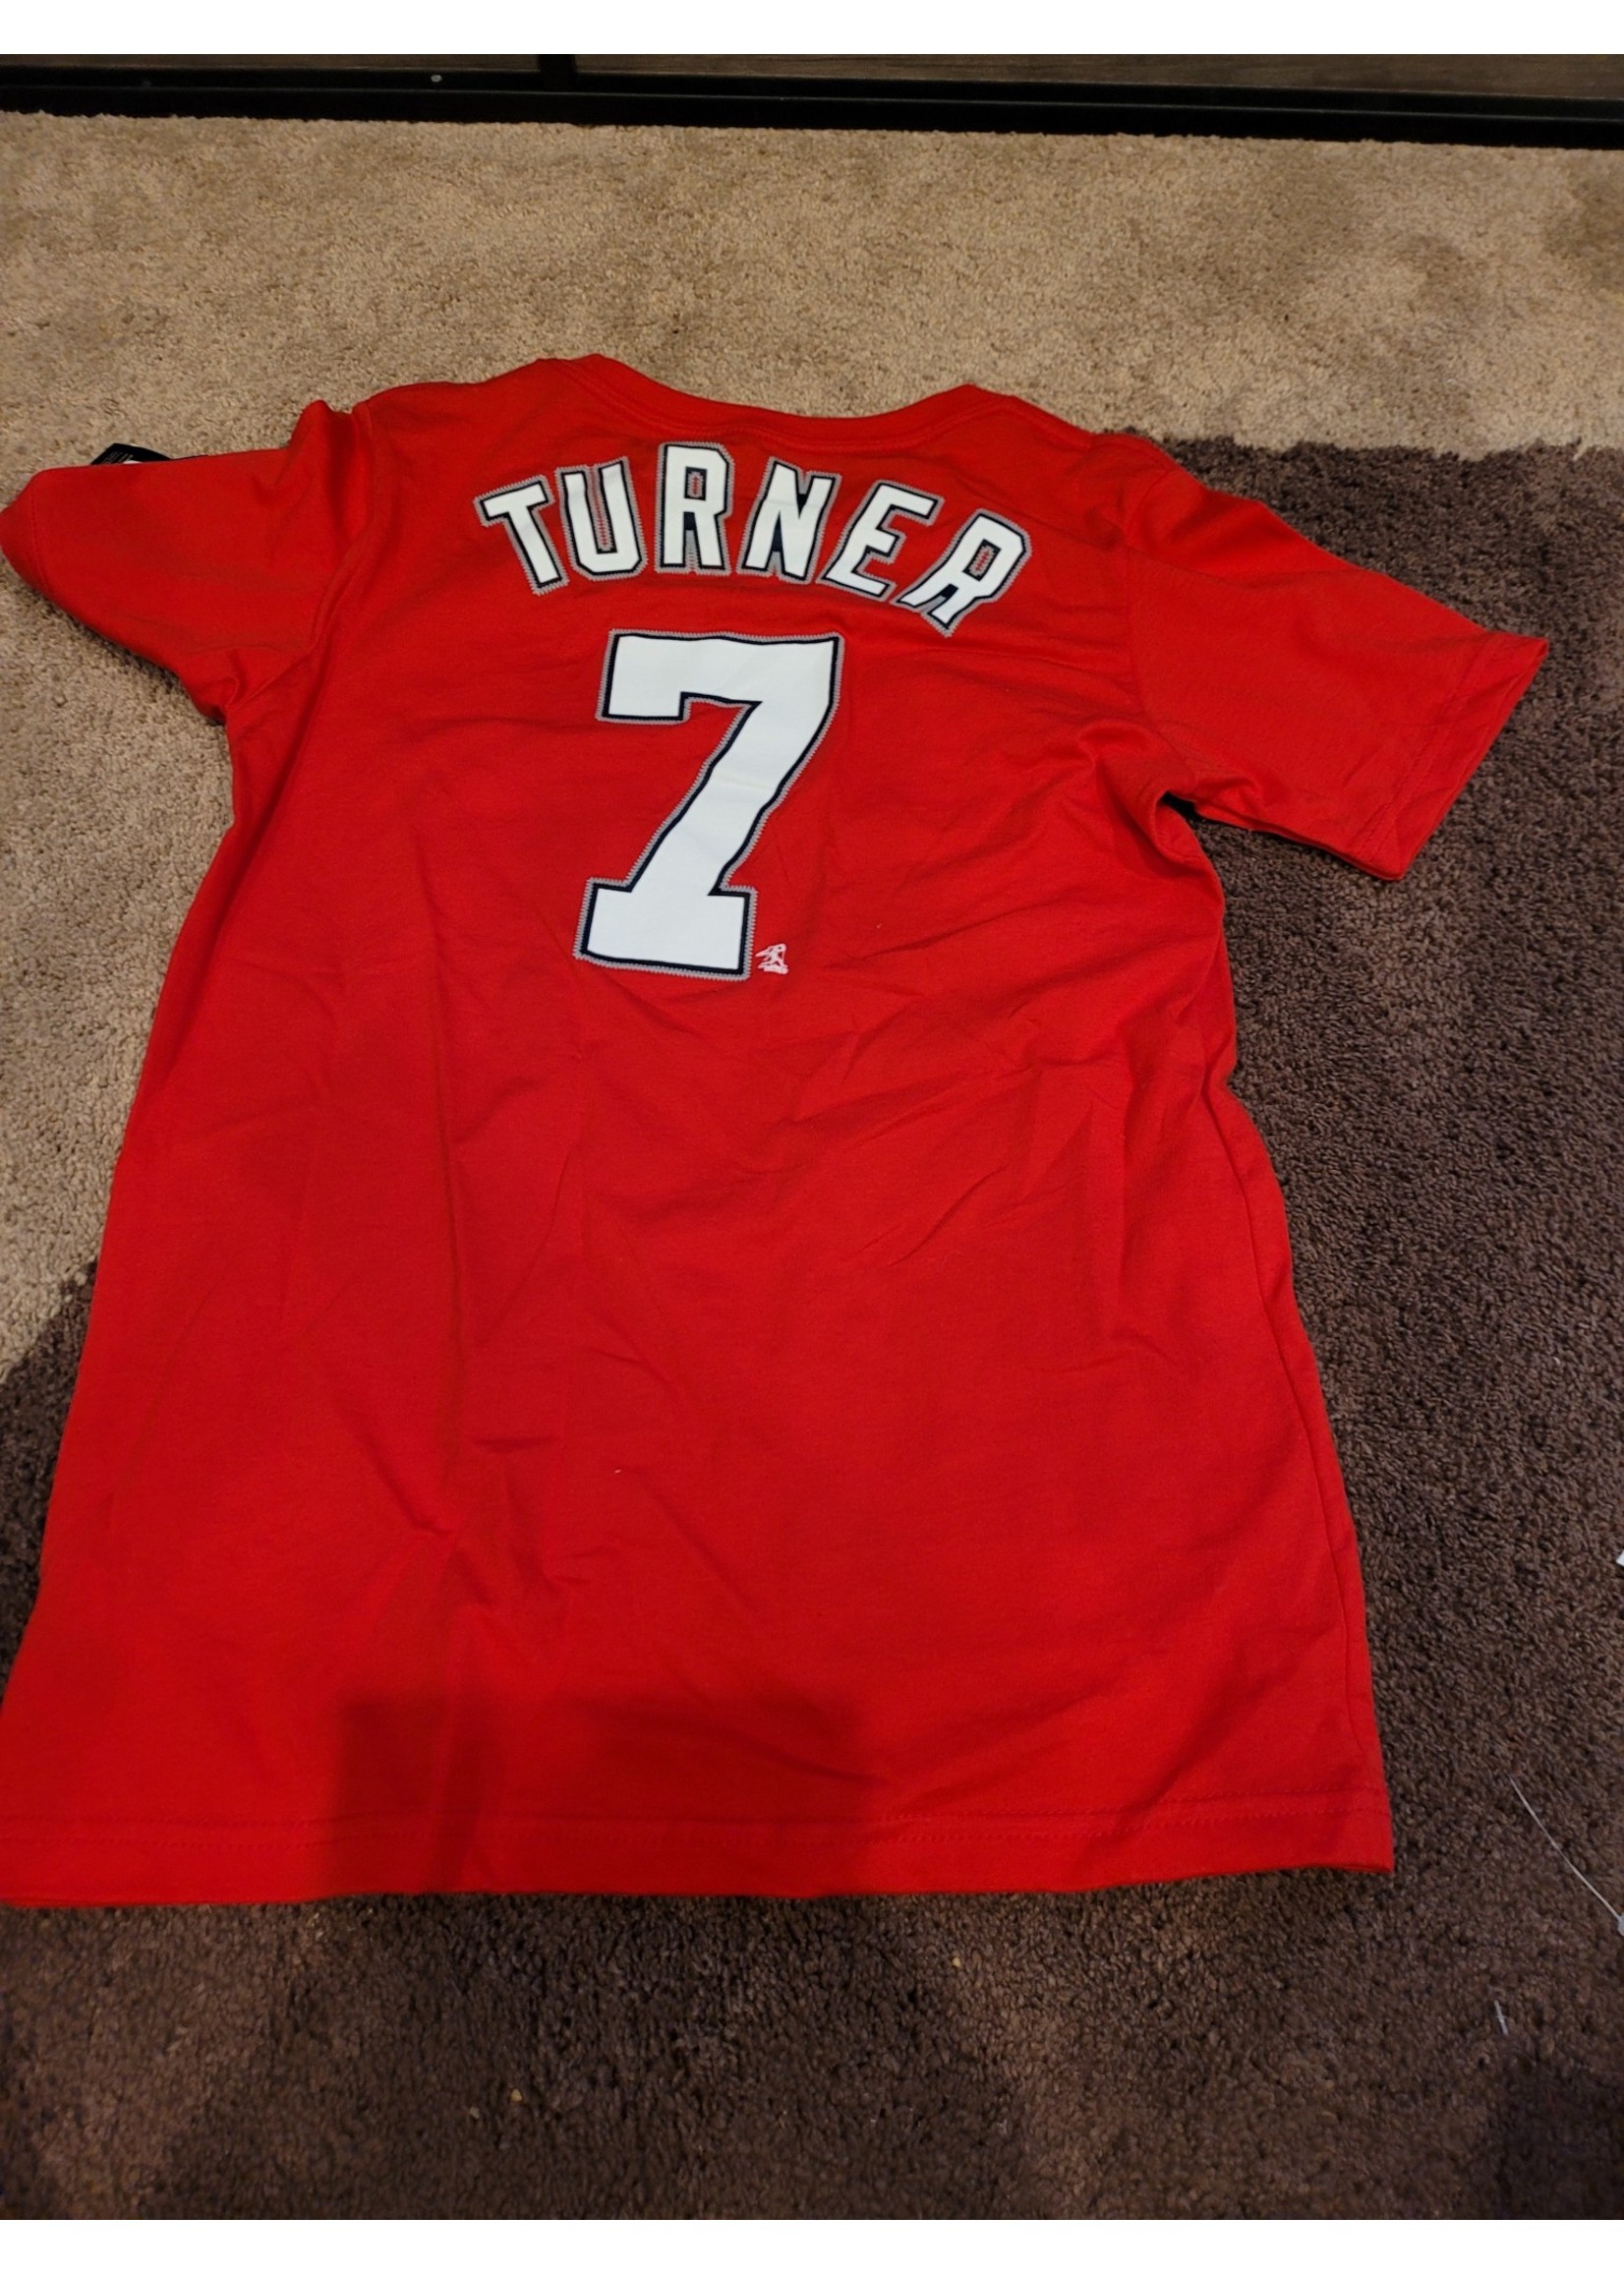 Boys MLB Washington Nationals Jersey T-Shirt #7 Turner Large - D3 Surplus  Outlet